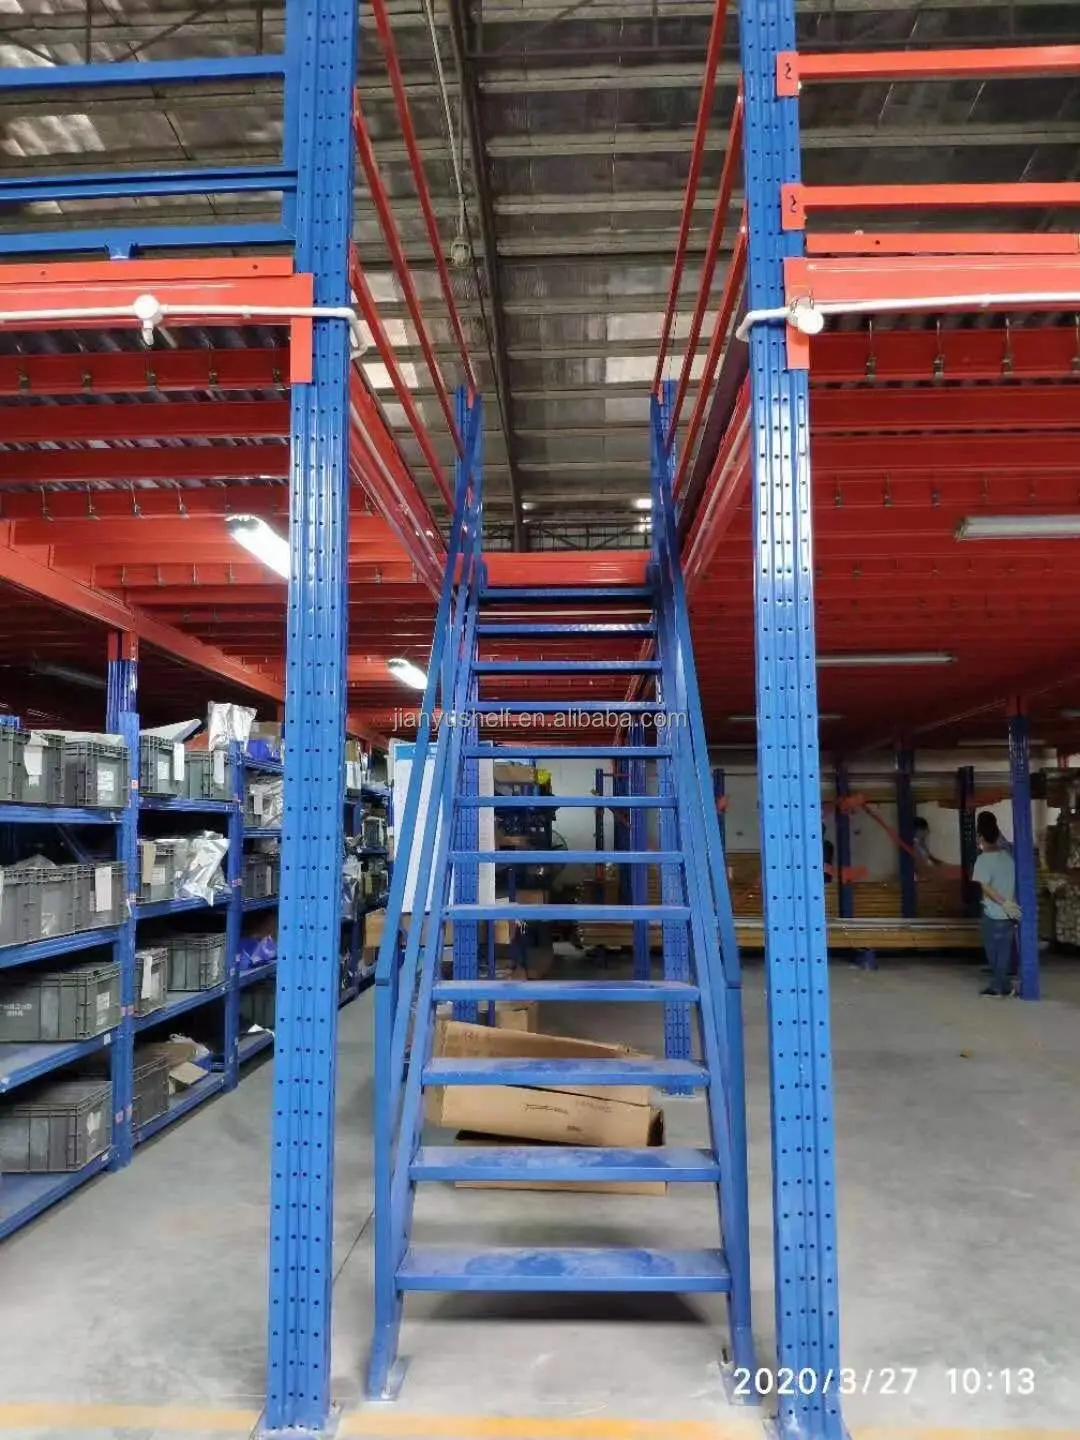 Assemble warehouse mezzanines platform heavy duty industrial storage racking system platform high quality warehouse storage rack details